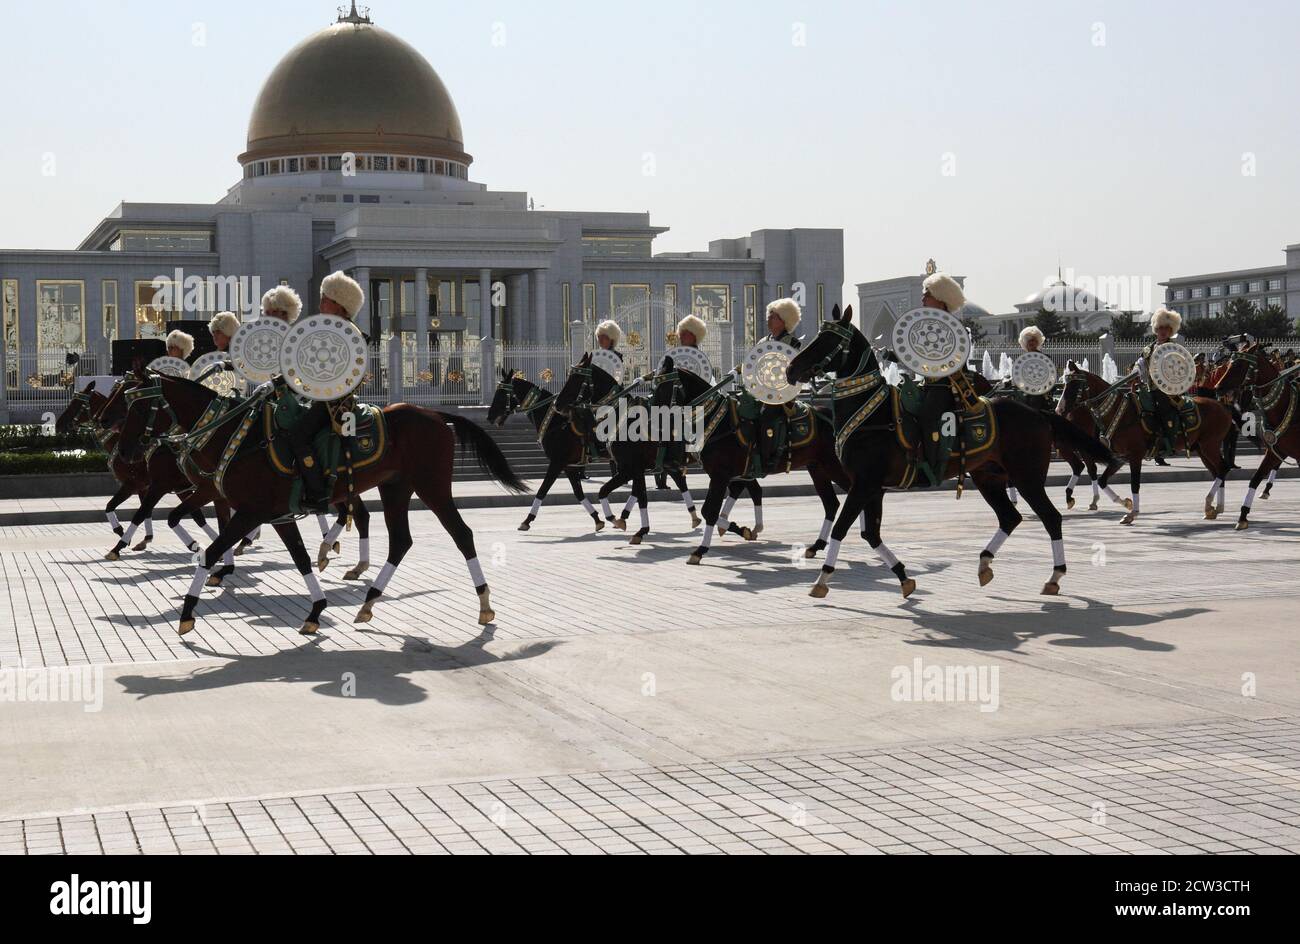 Turkmen service members ride horses during a parade marking Independence Day in Ashgabat, Turkmenistan September 27, 2020. REUTERS/Vyacheslav Sarkisyan Stock Photo